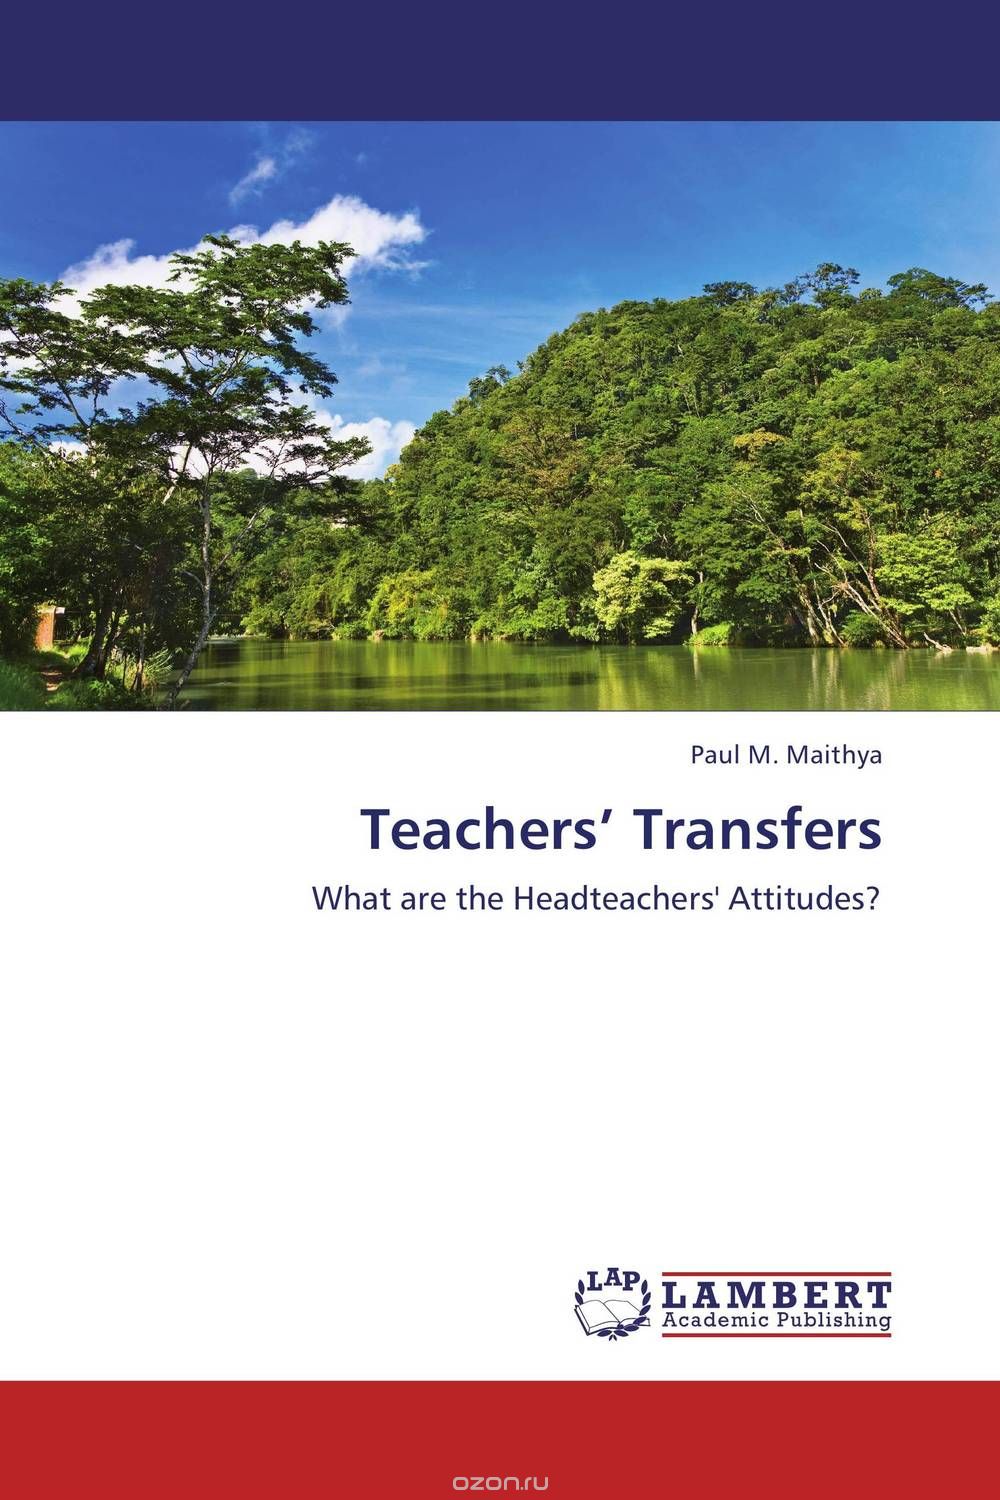 Скачать книгу "Teachers’ Transfers"